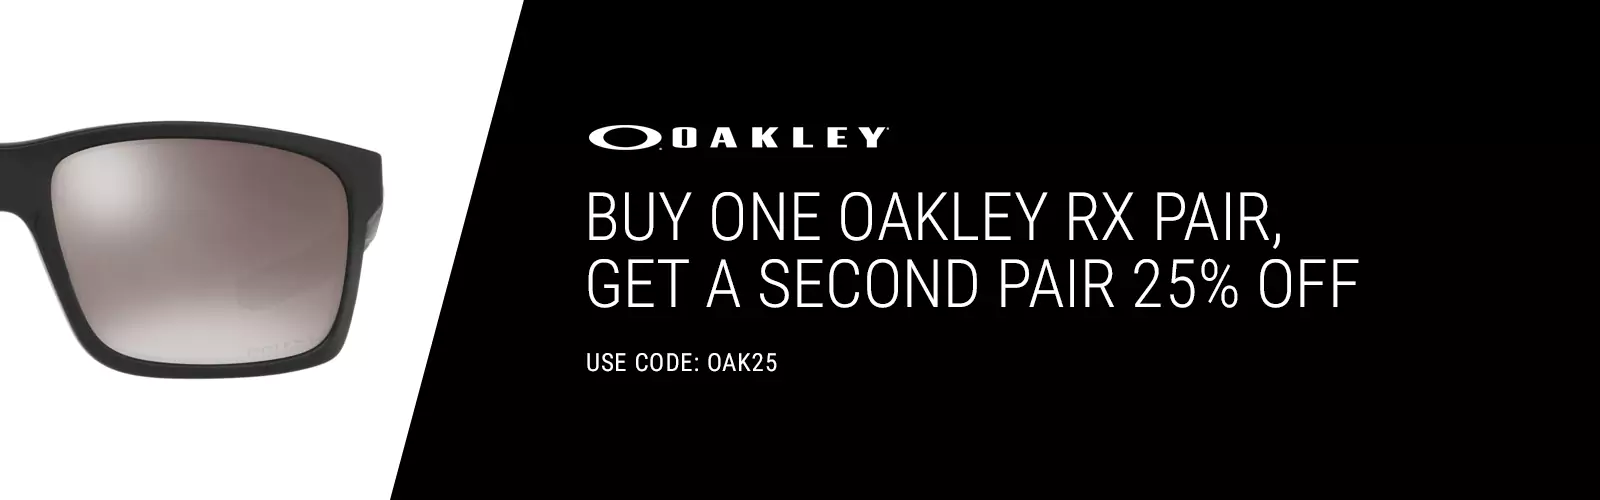 oakley buy one get one 50 off